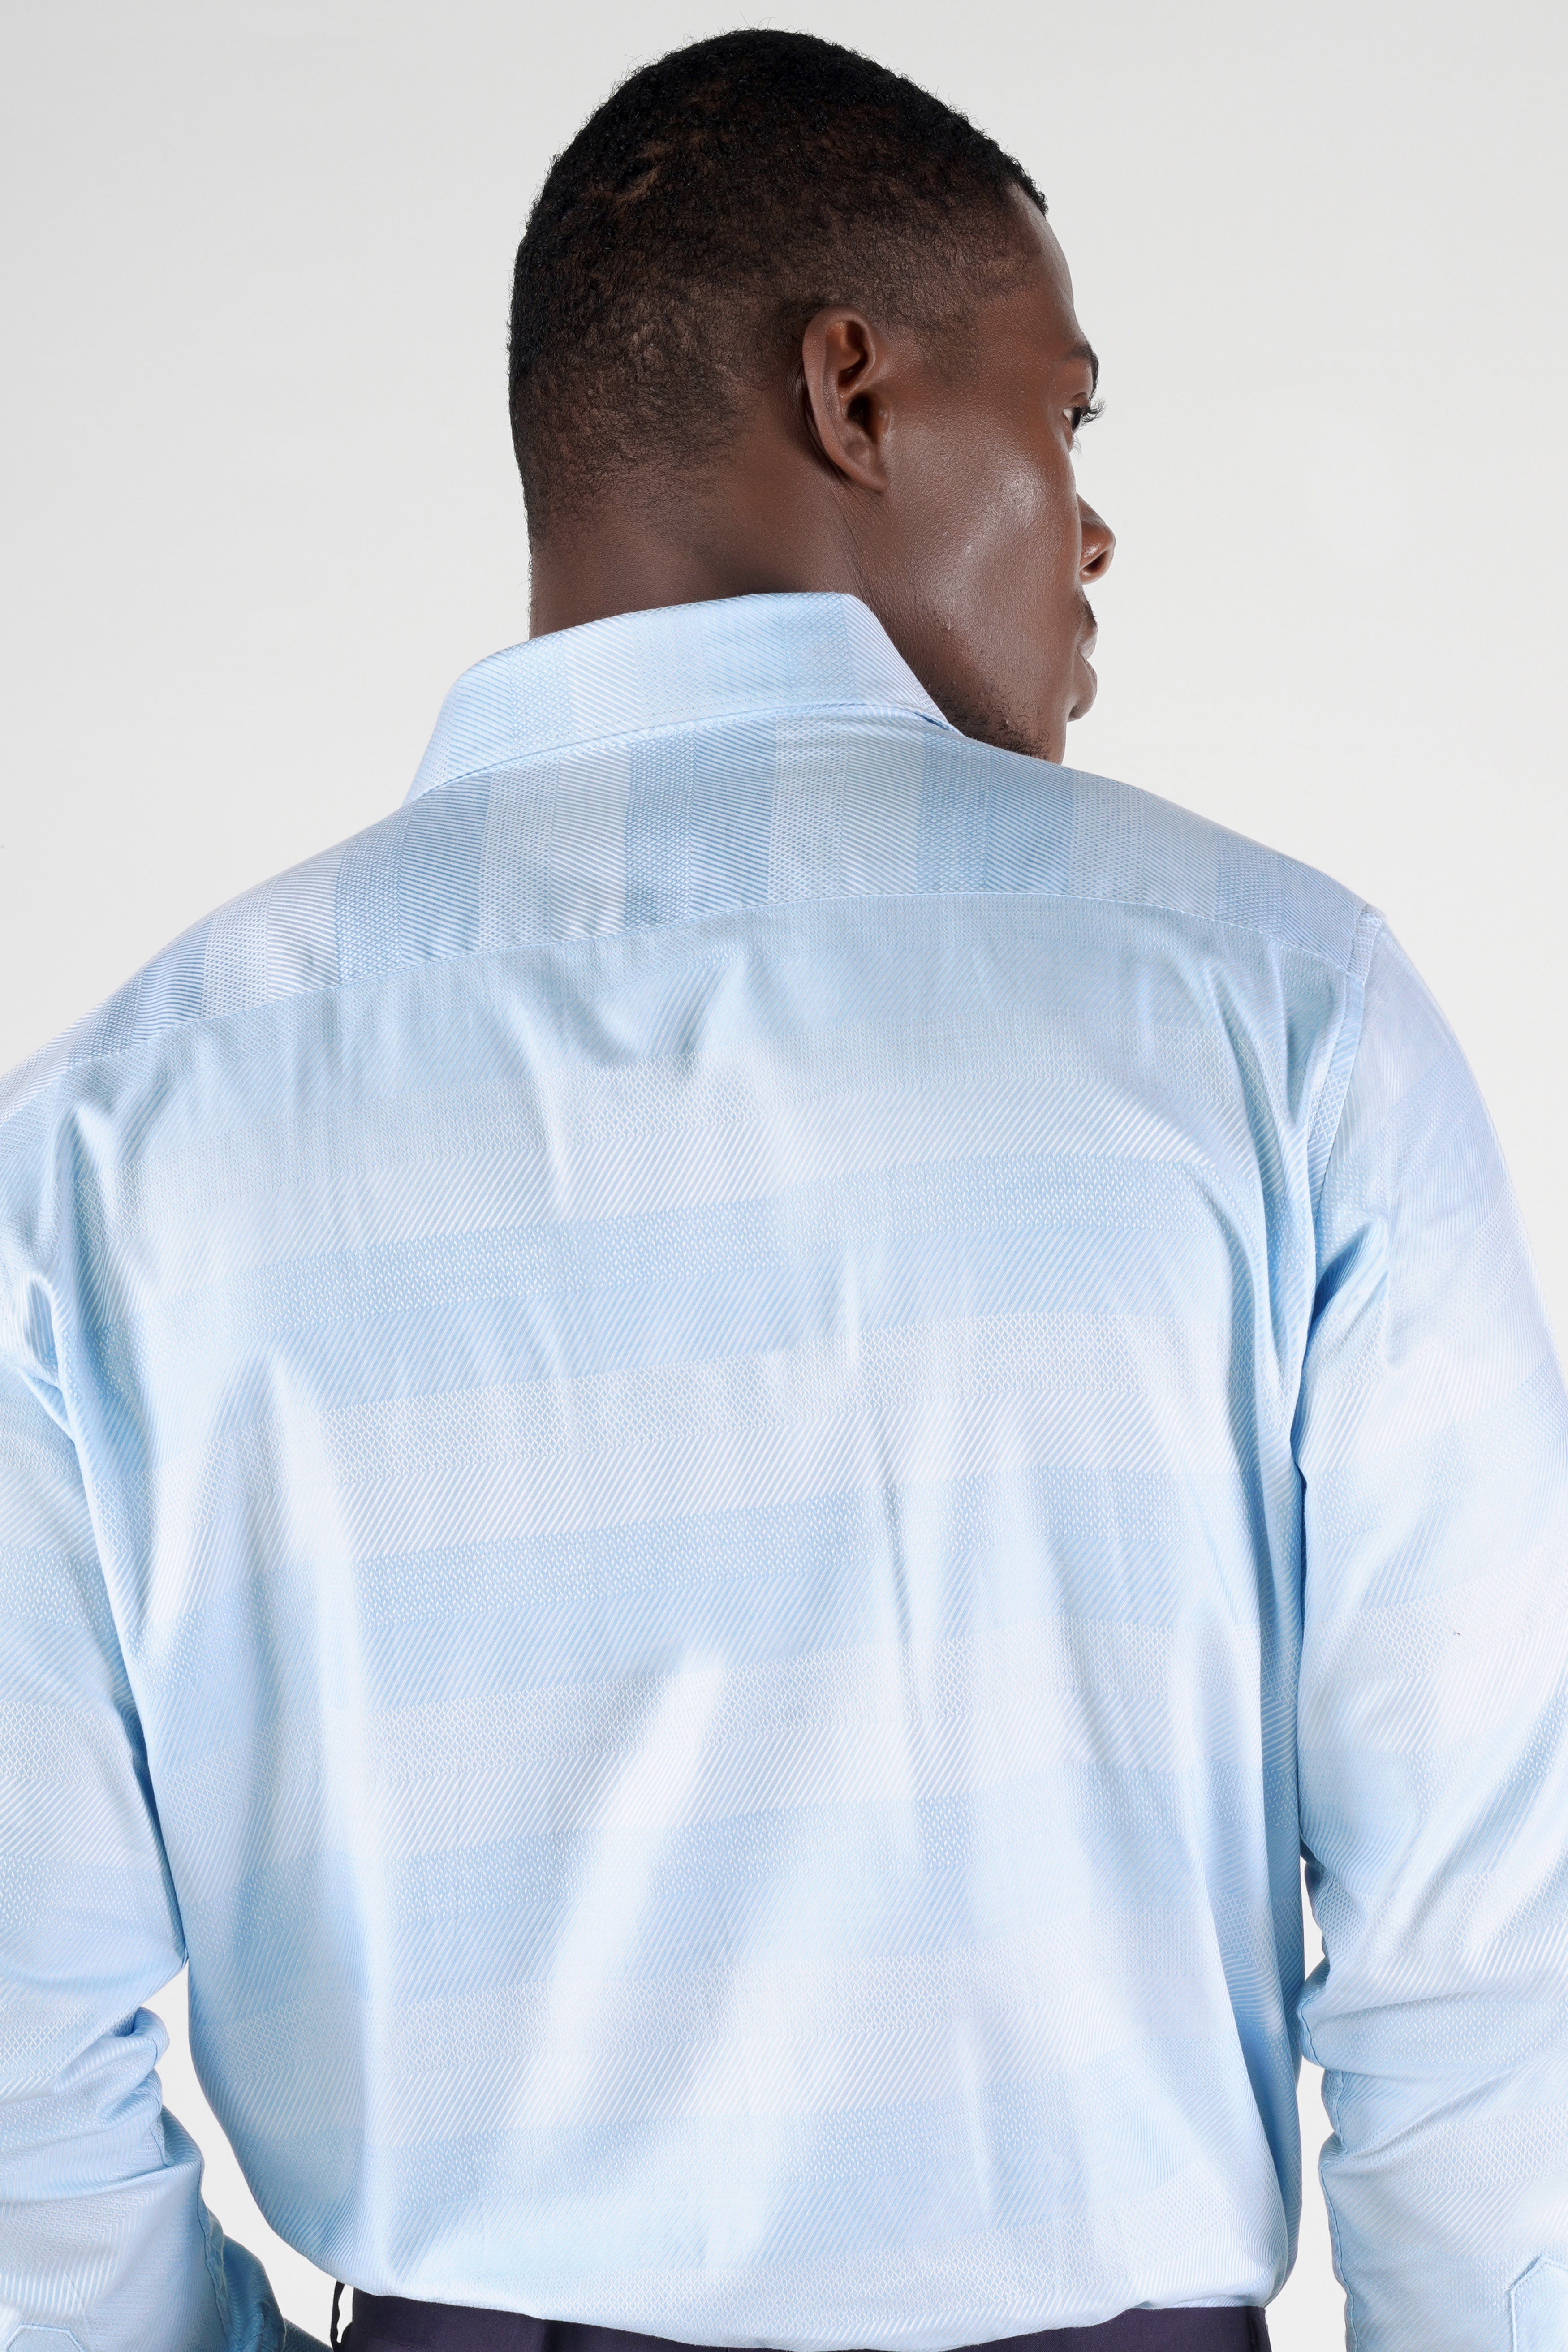 Botticelli Blue and White Jacquard Textured Premium Giza Cotton Shirt